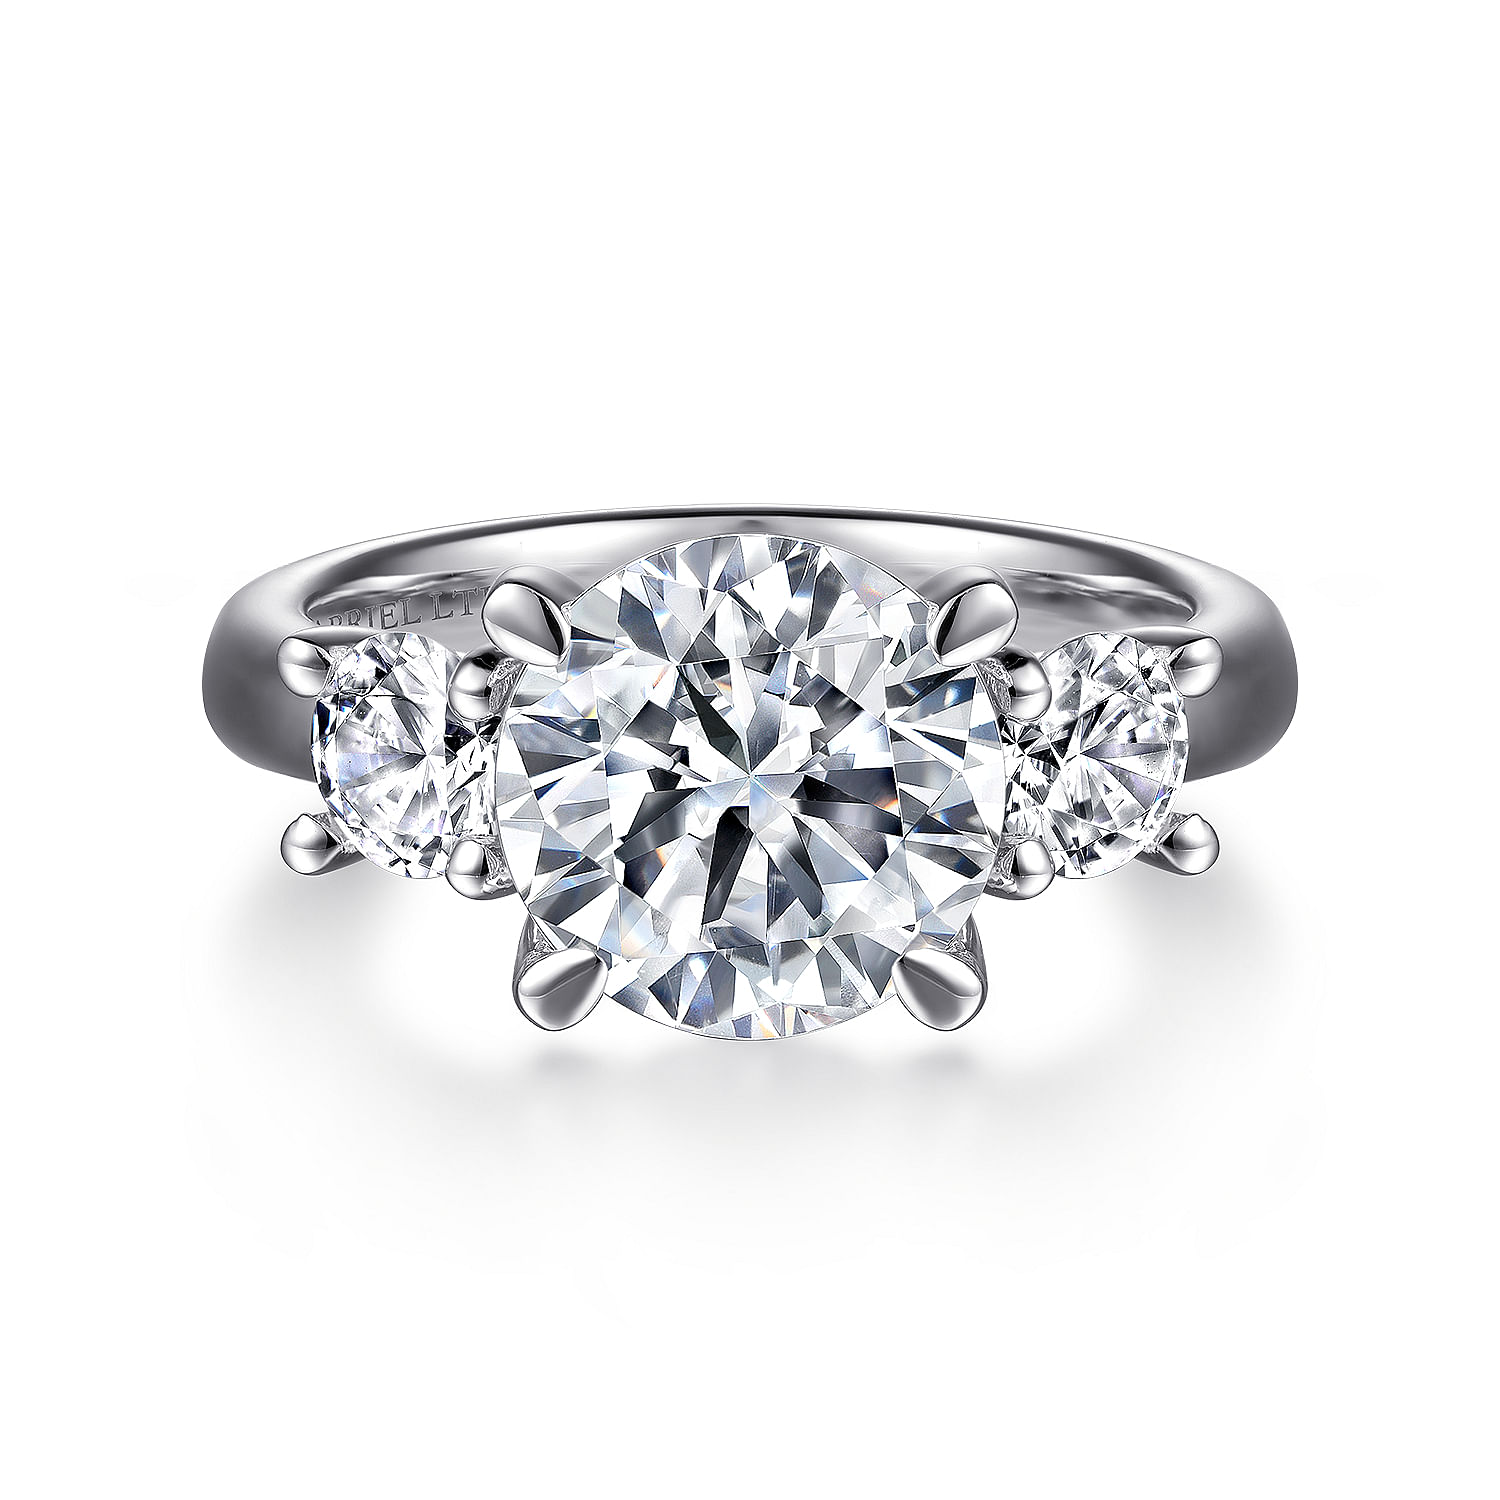 Gabriel - 18K White Gold Round Three Stone Diamond Engagement Ring